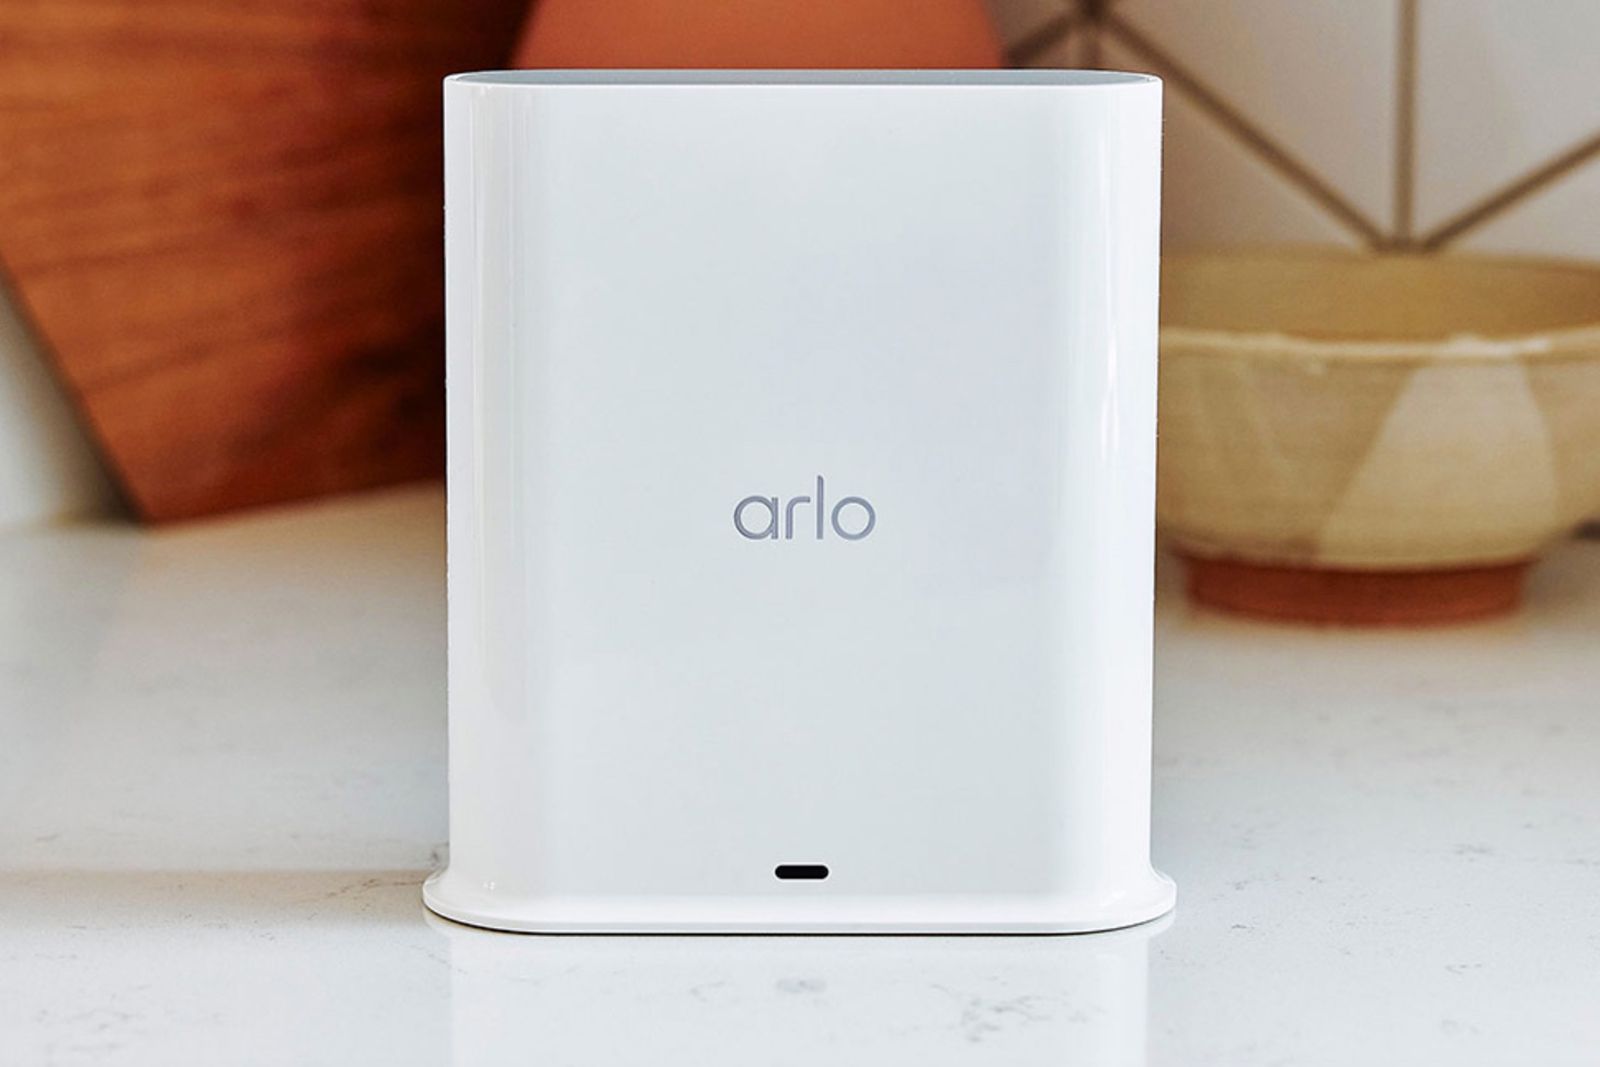 Arlo smartub or base station